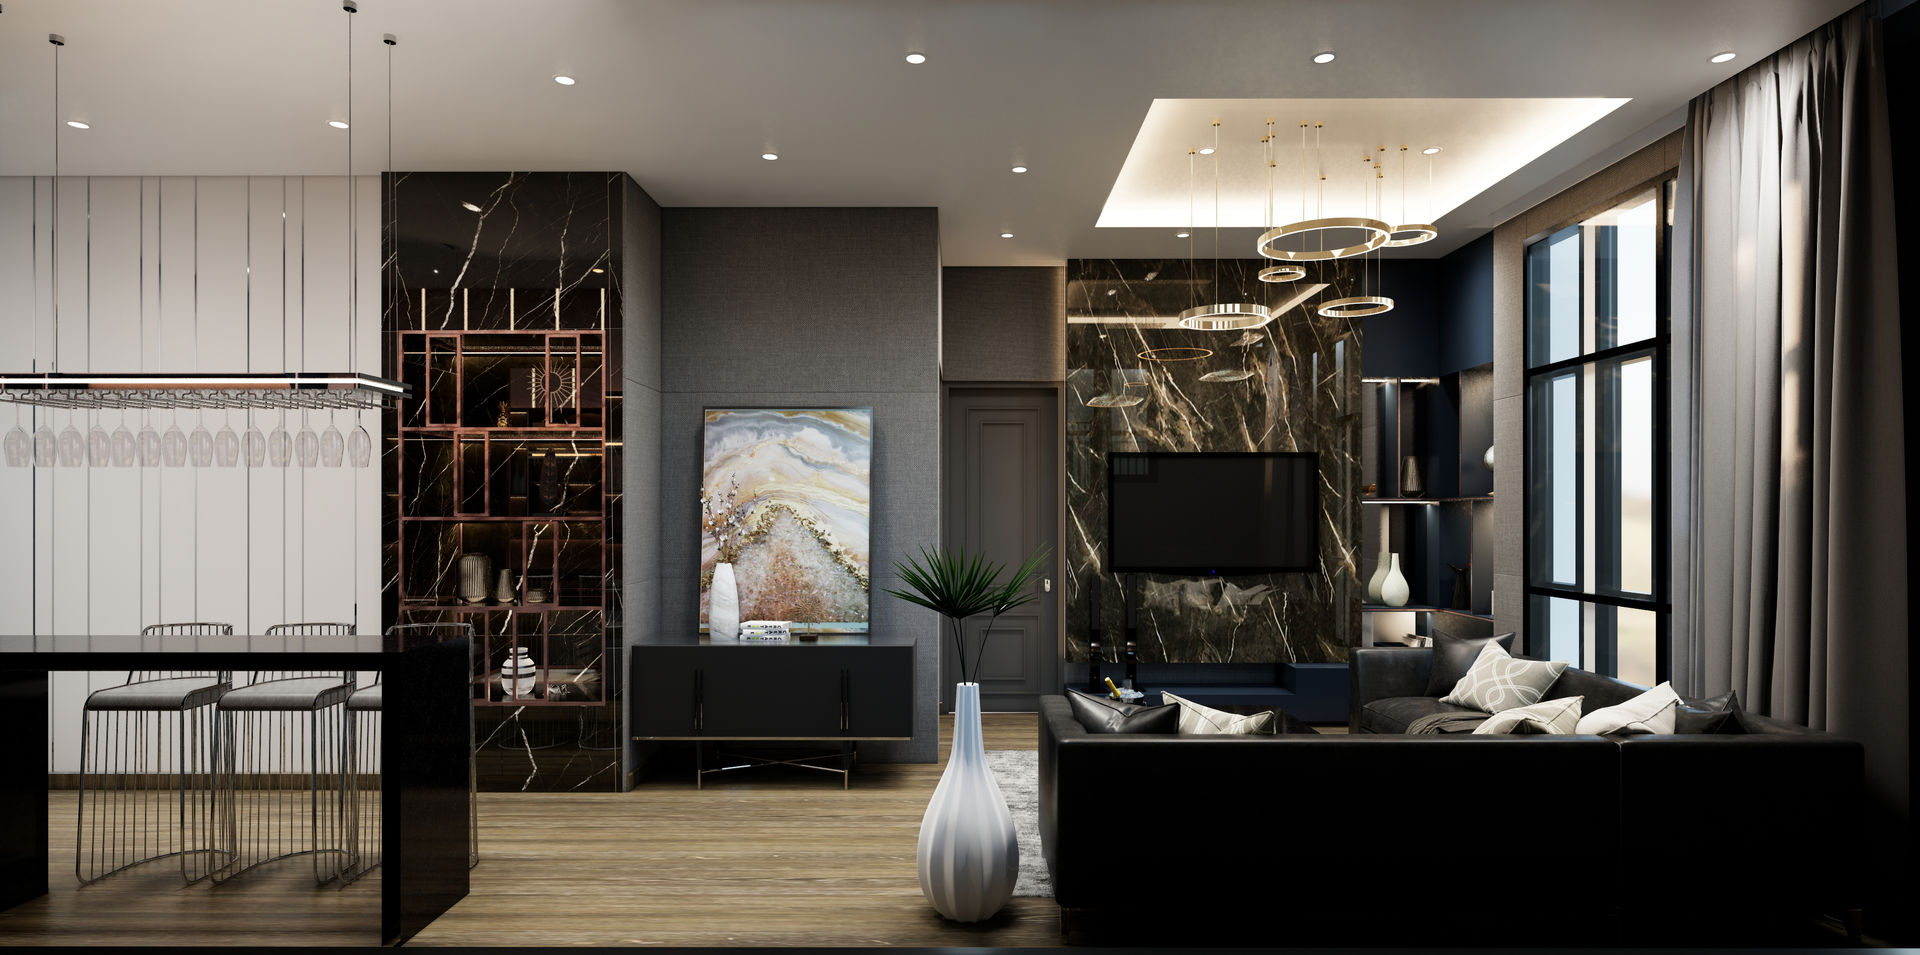 The Totnes Condo, Modernize Design + Turnkey Modernize Design + Turnkey Modern living room